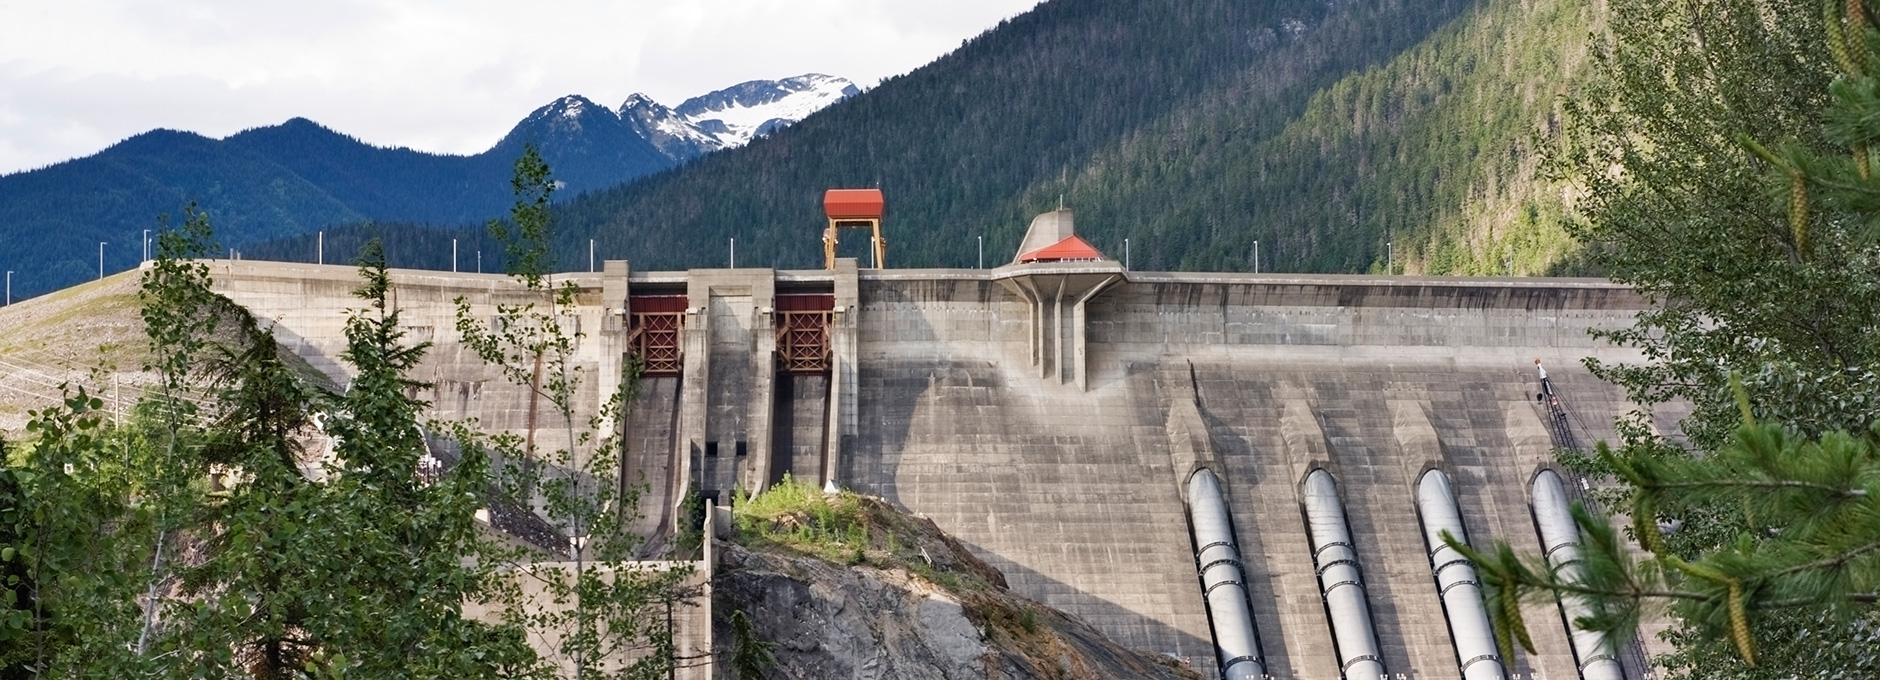 annex-XIV-management-models-hydropower-cascade-reservoirs-banner-01